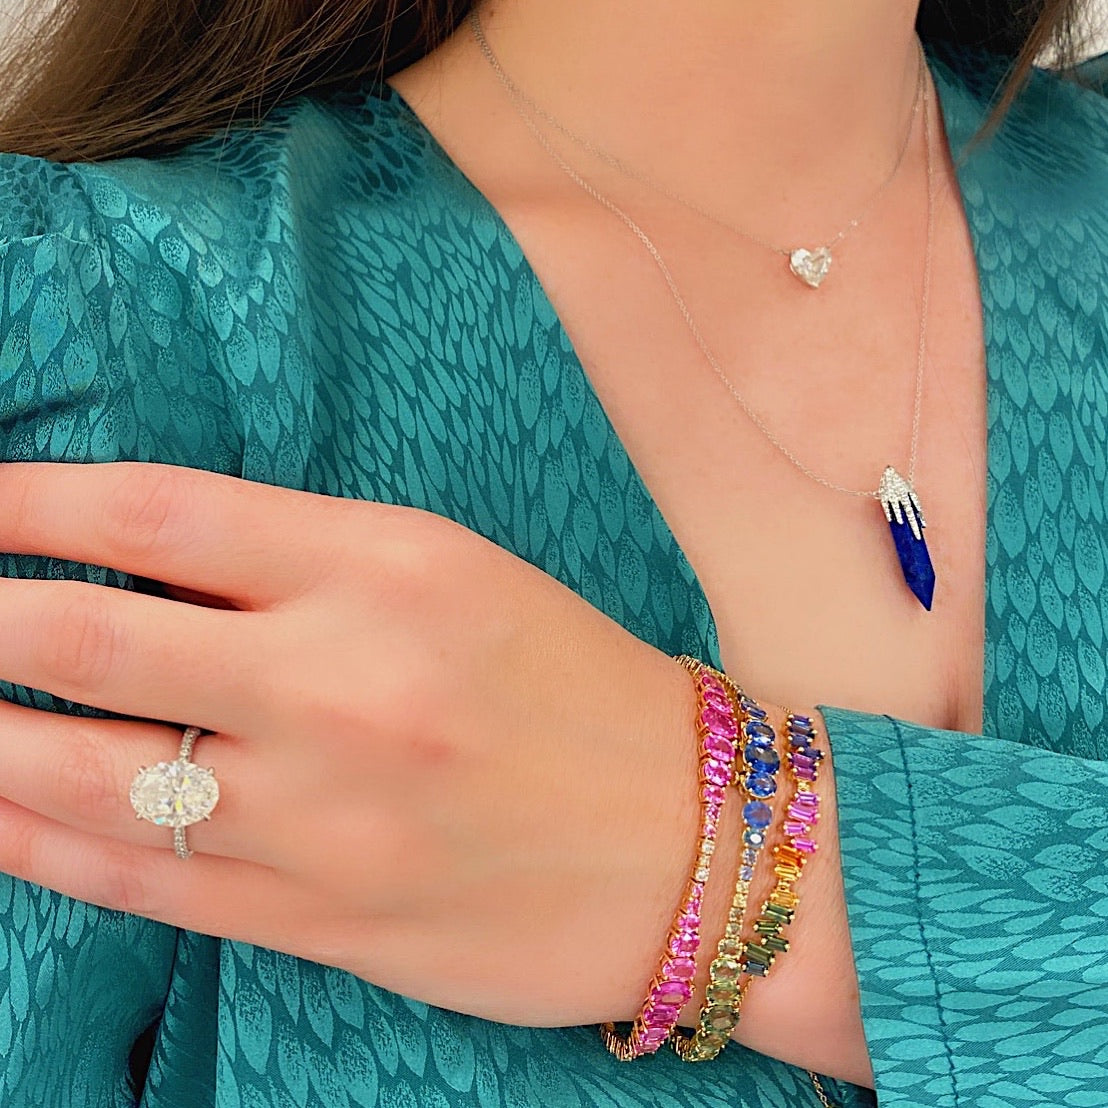 Pink Ombre Sapphire and Diamond Bracelet 18K Rose Gold / 6.75